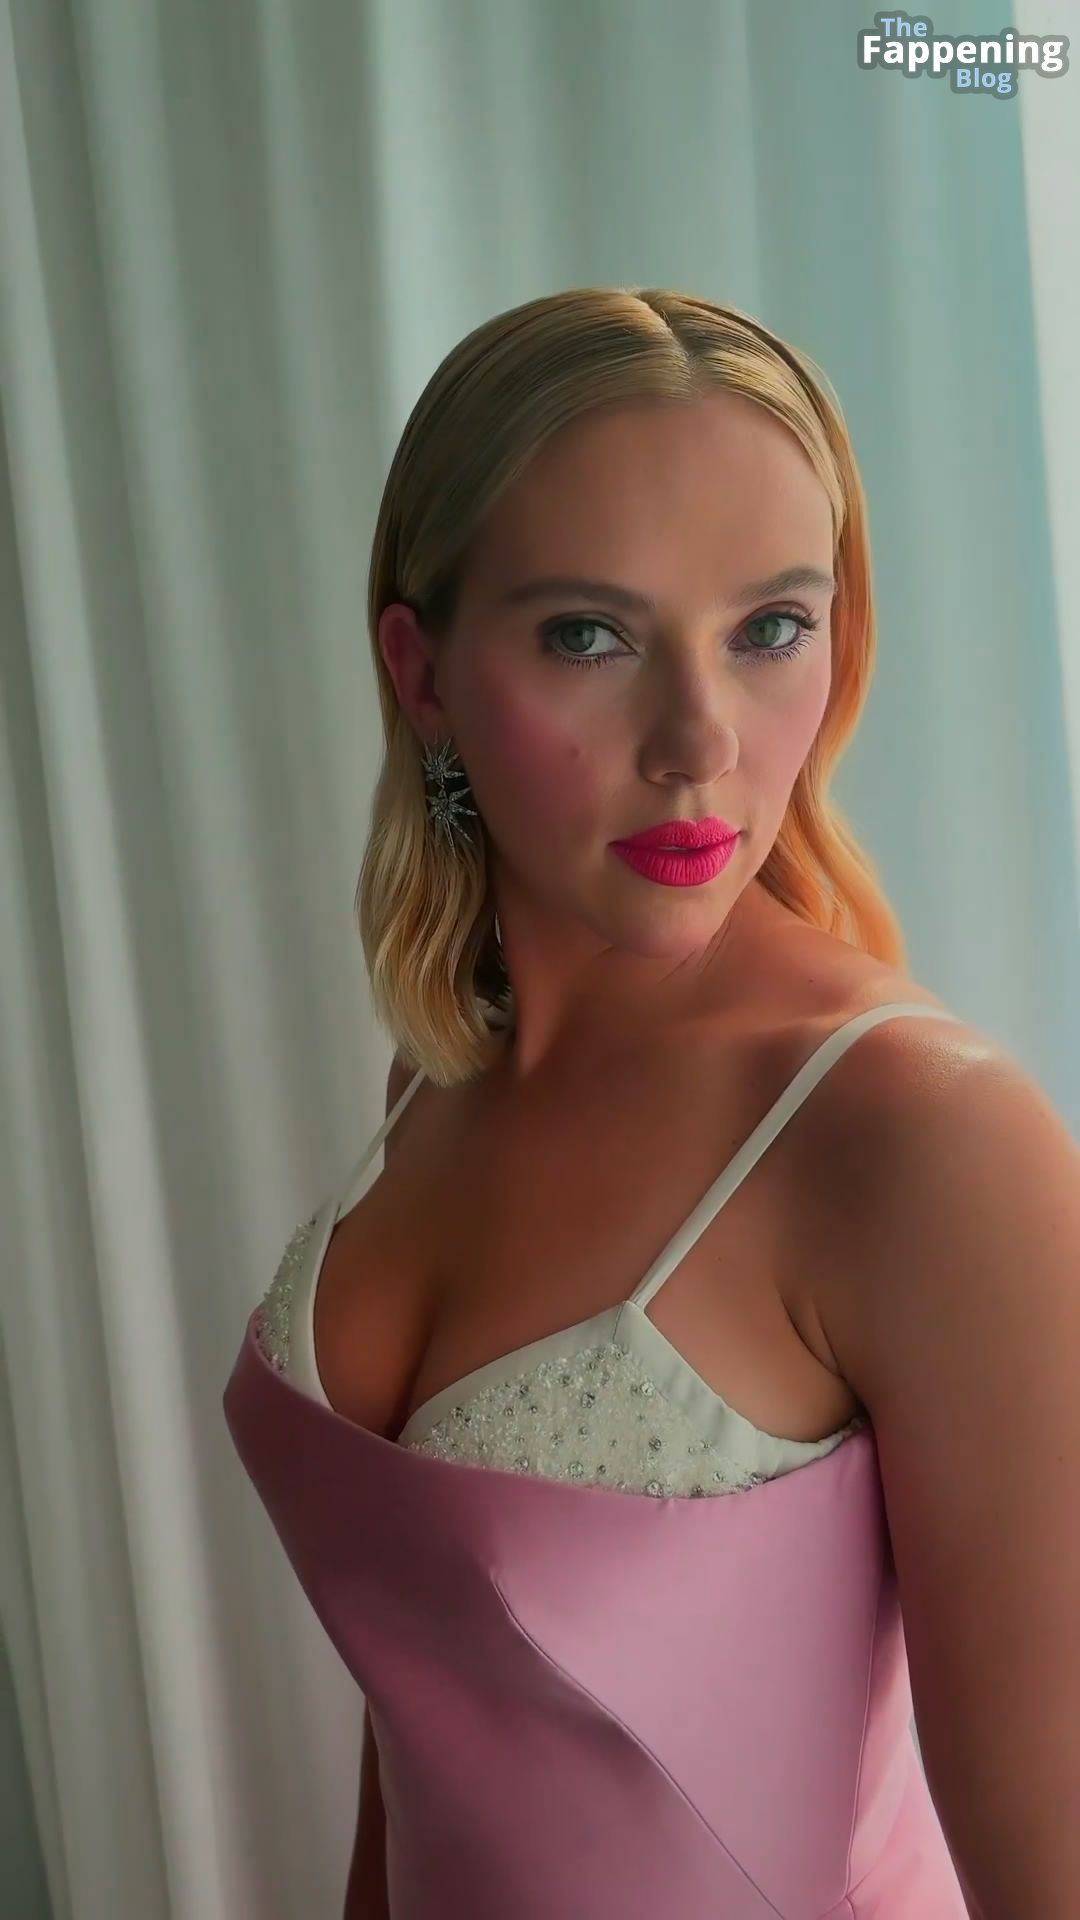 Scarlett-Johansson-Sexy-The-Fappening-Blog-30.jpg